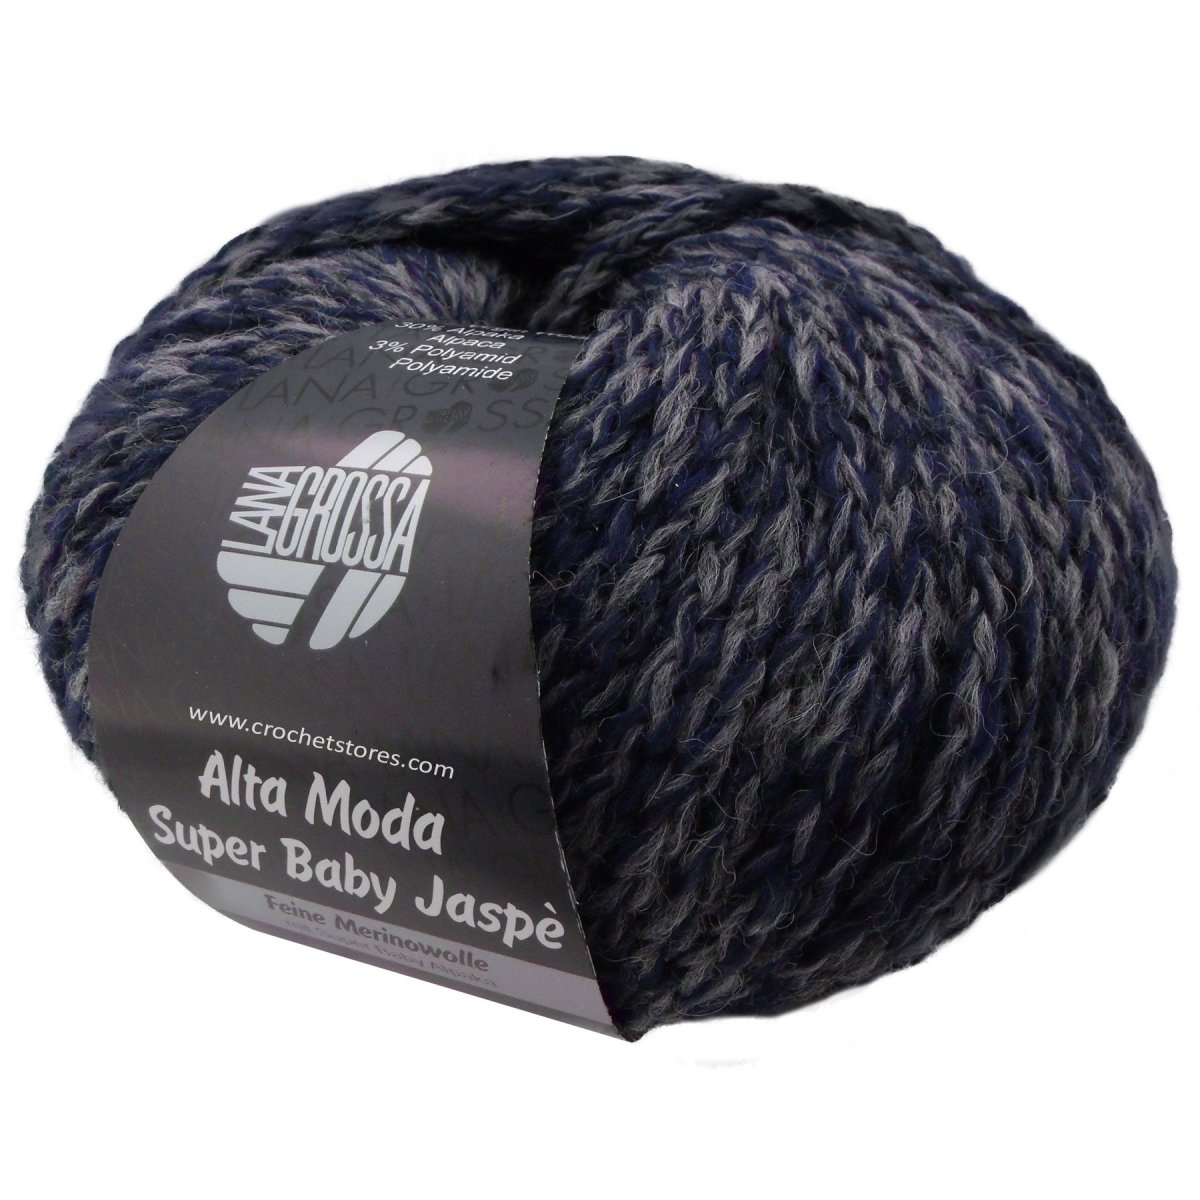 ALTA MODA SUPER BABY - Crochetstores779-01074033493163606